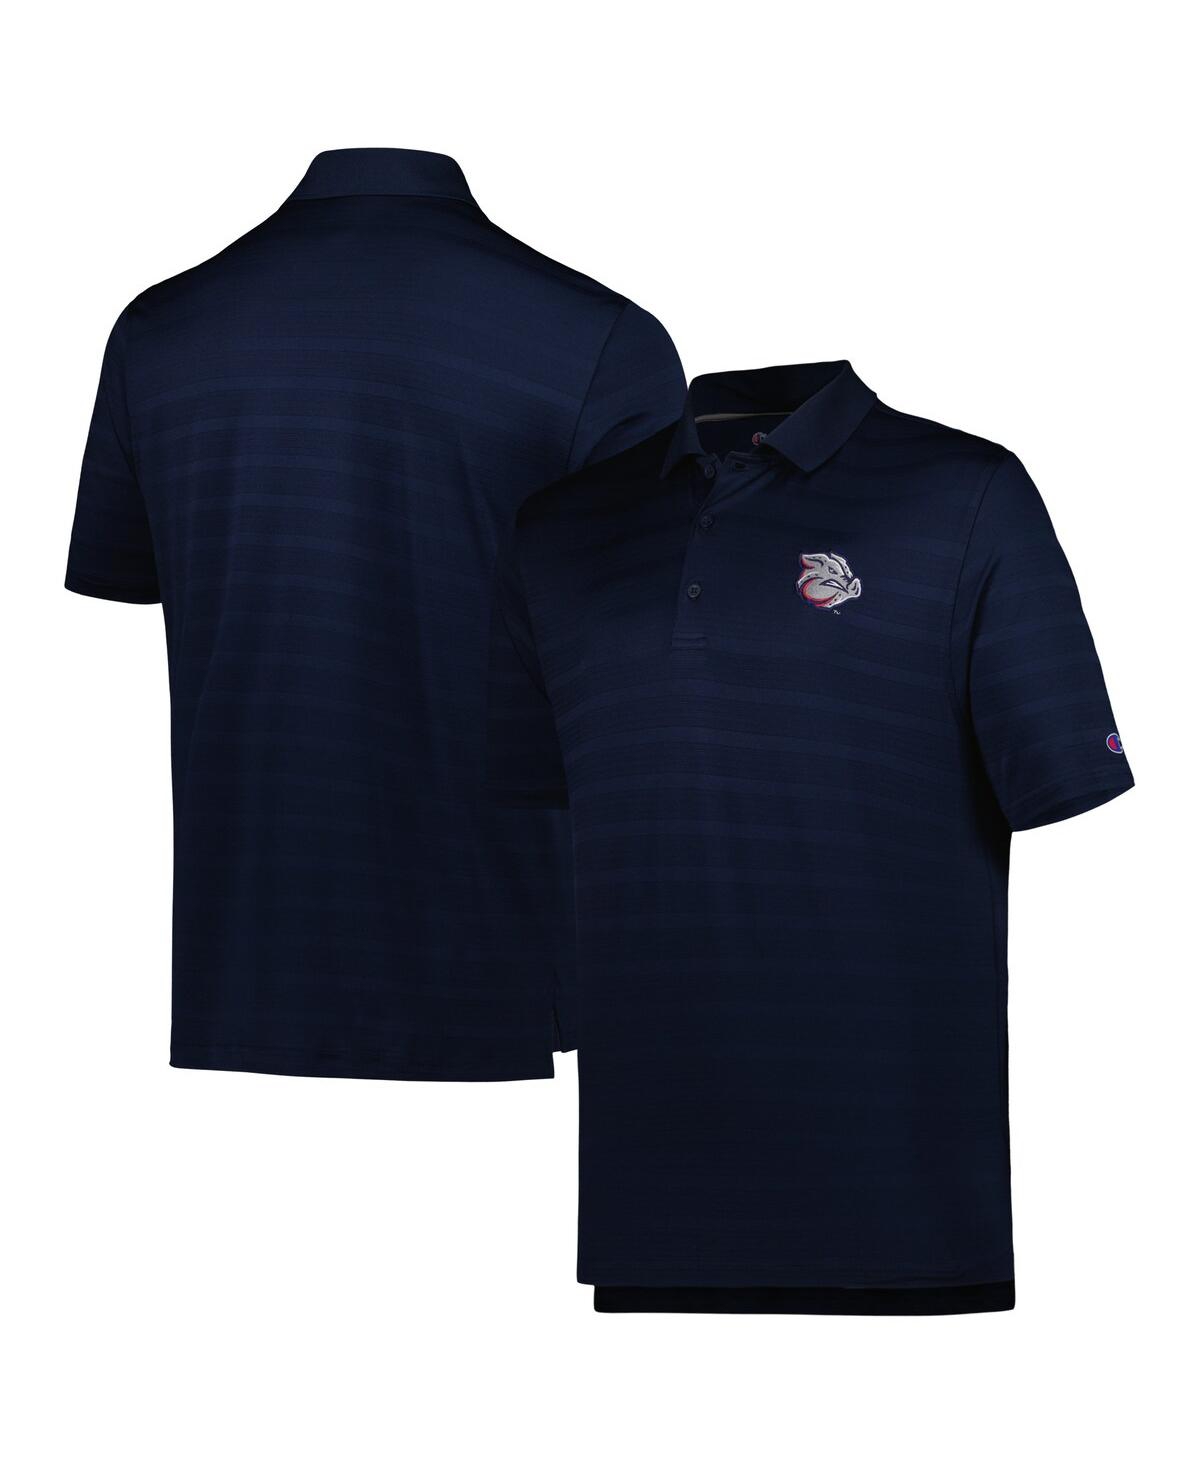 Champion Men's  Navy Lehigh Valley Ironpigs Textured Solid Polo Shirt